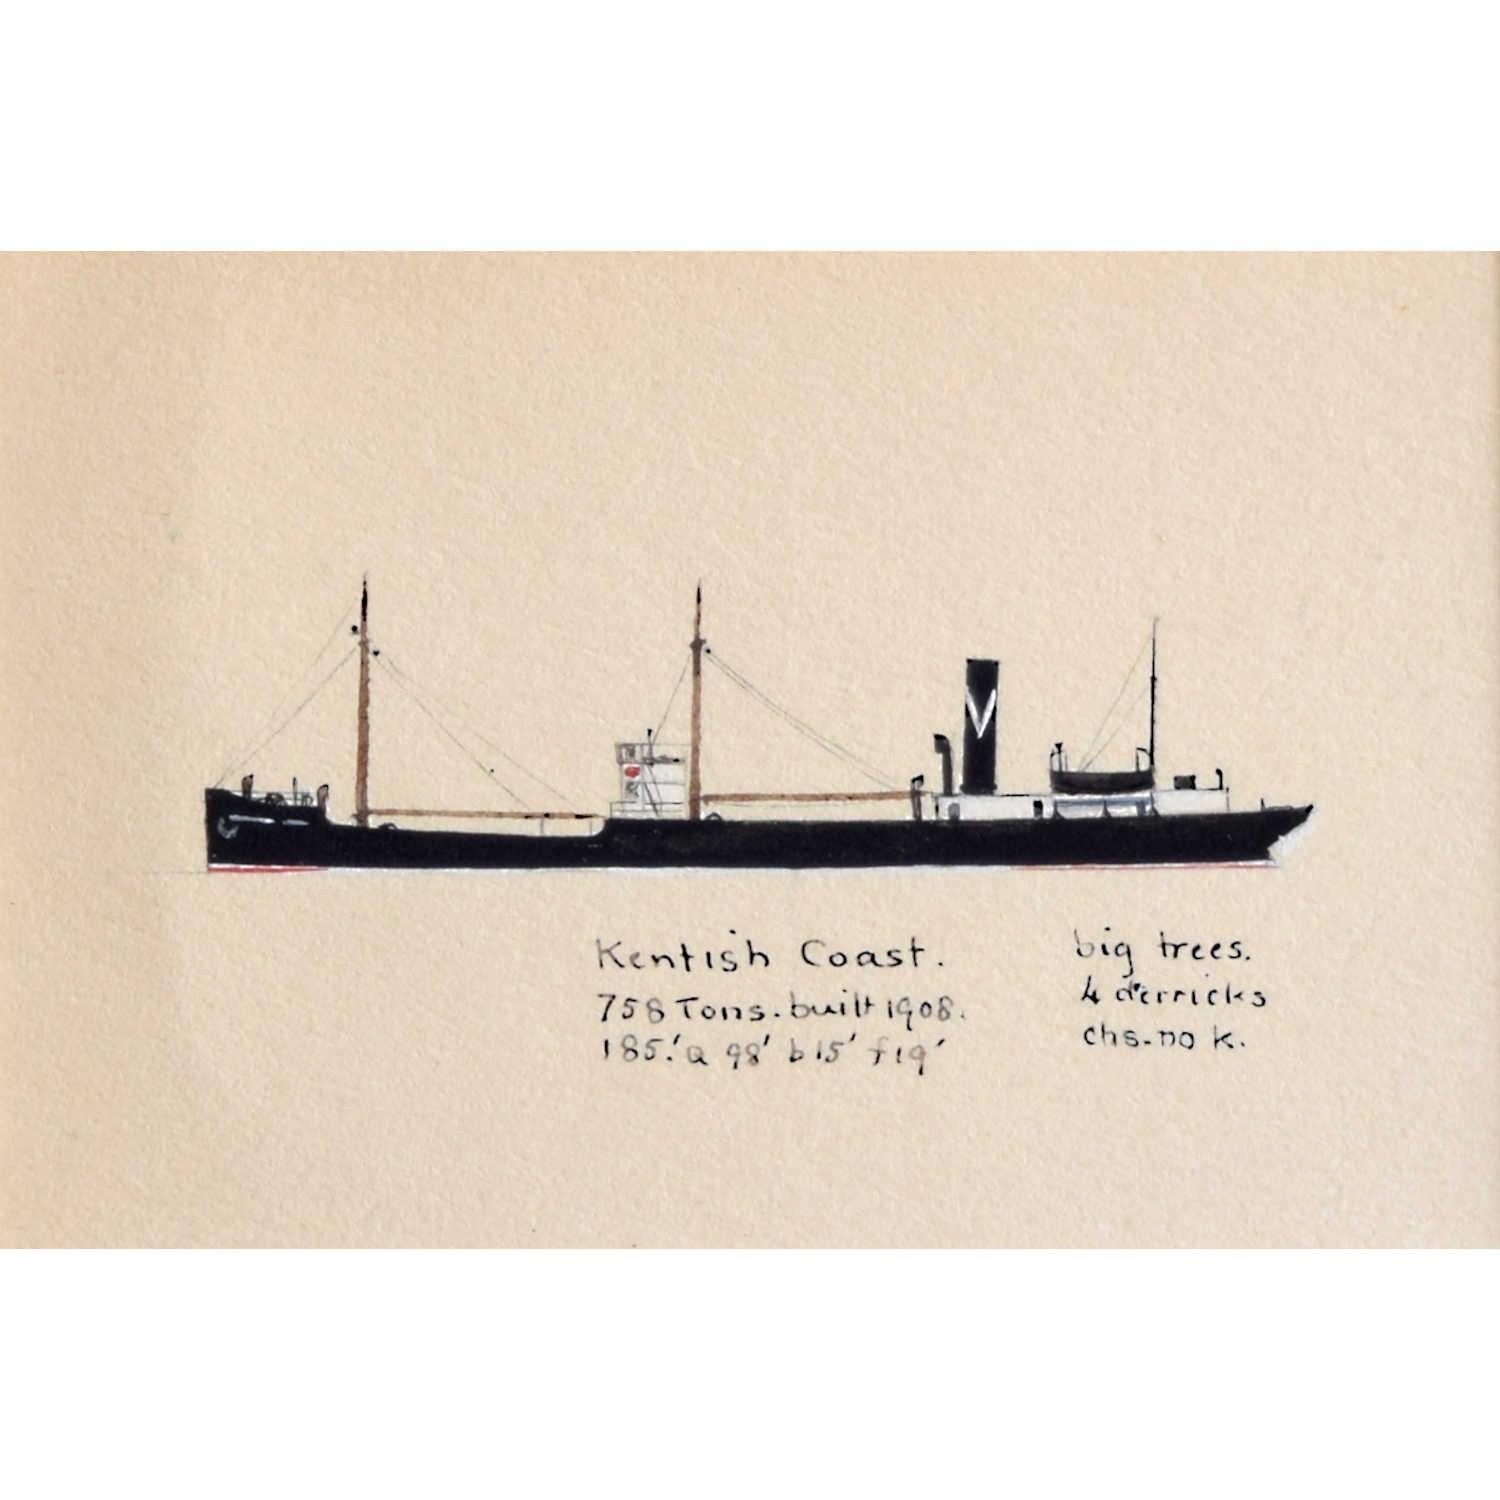 Laurence Dunn, SS Kentish Coast (c.1925) Merchantman Tramp Steamer